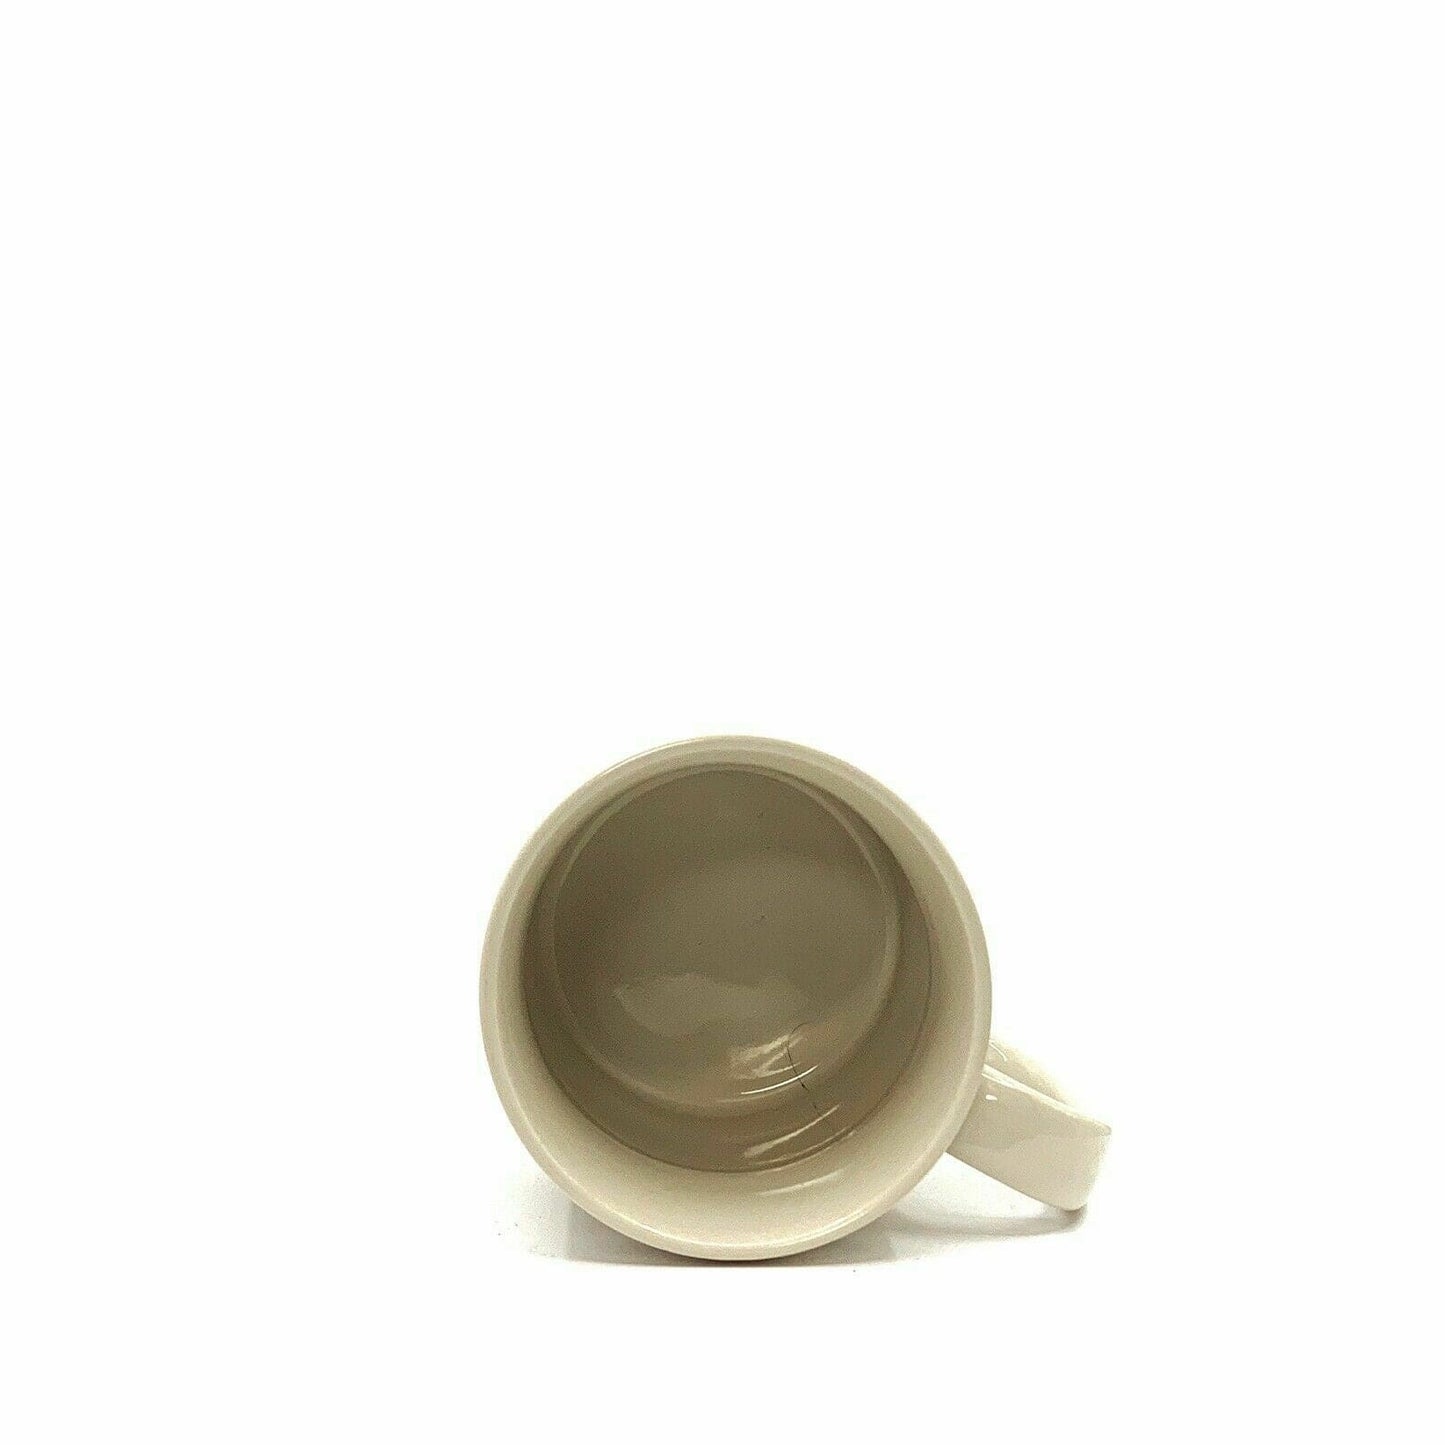 Captivating City Merchandise View Of The World Ceramic Souvenir Coffee Cup Mug - 14oz White Atlanta